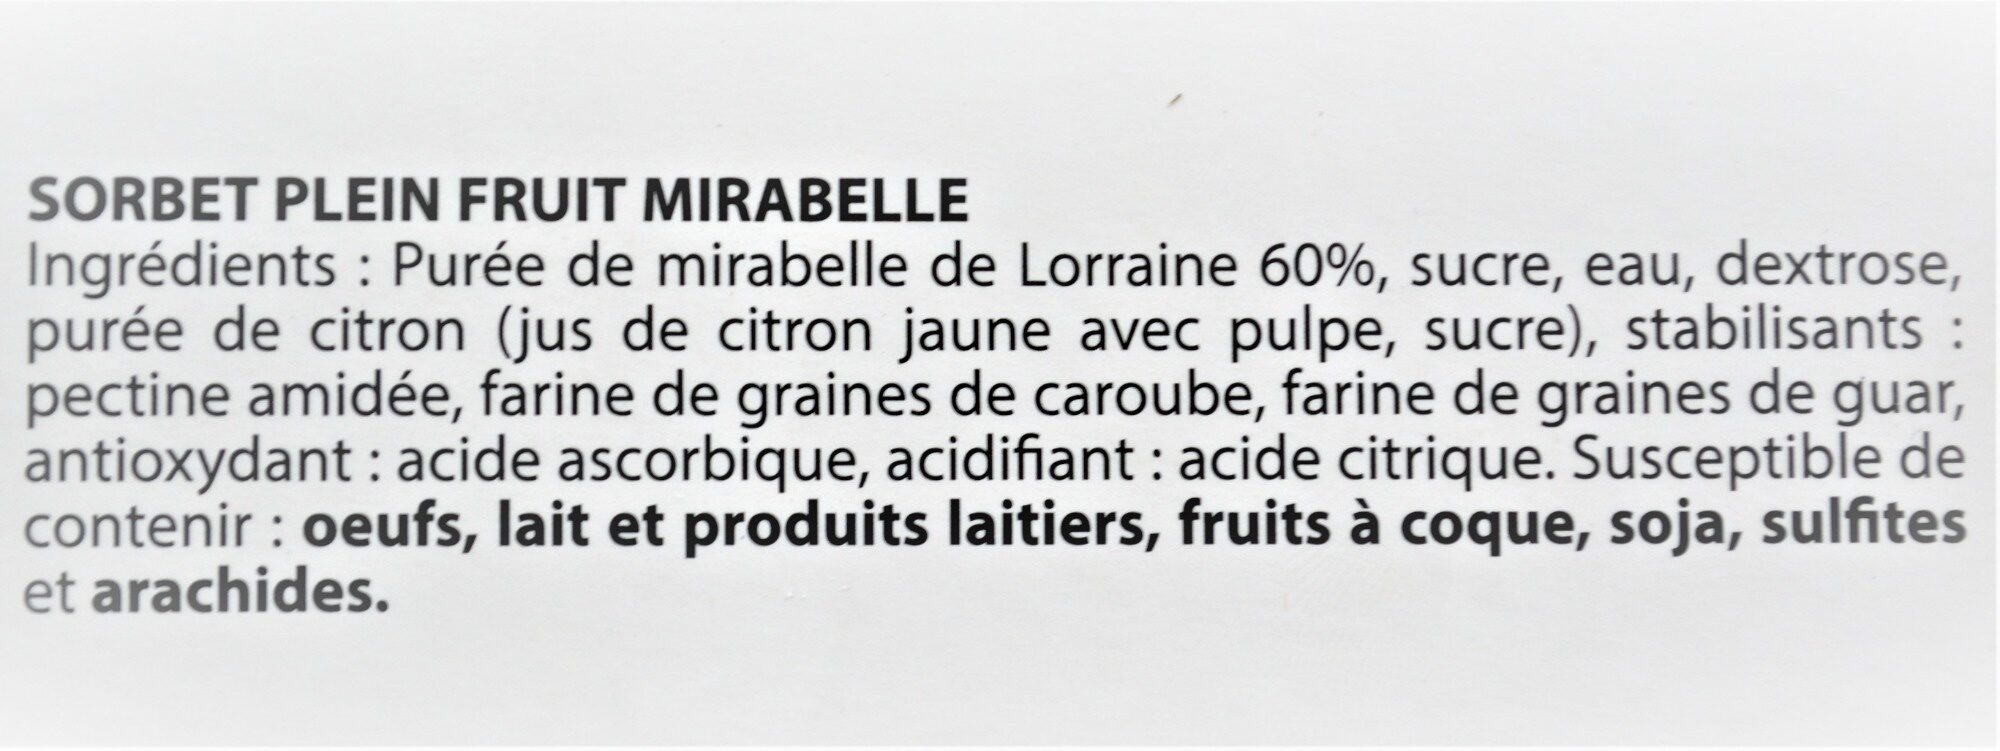 Sorbet plein fruit MIRABELLE, 60% de fruit - Ingredientes - fr